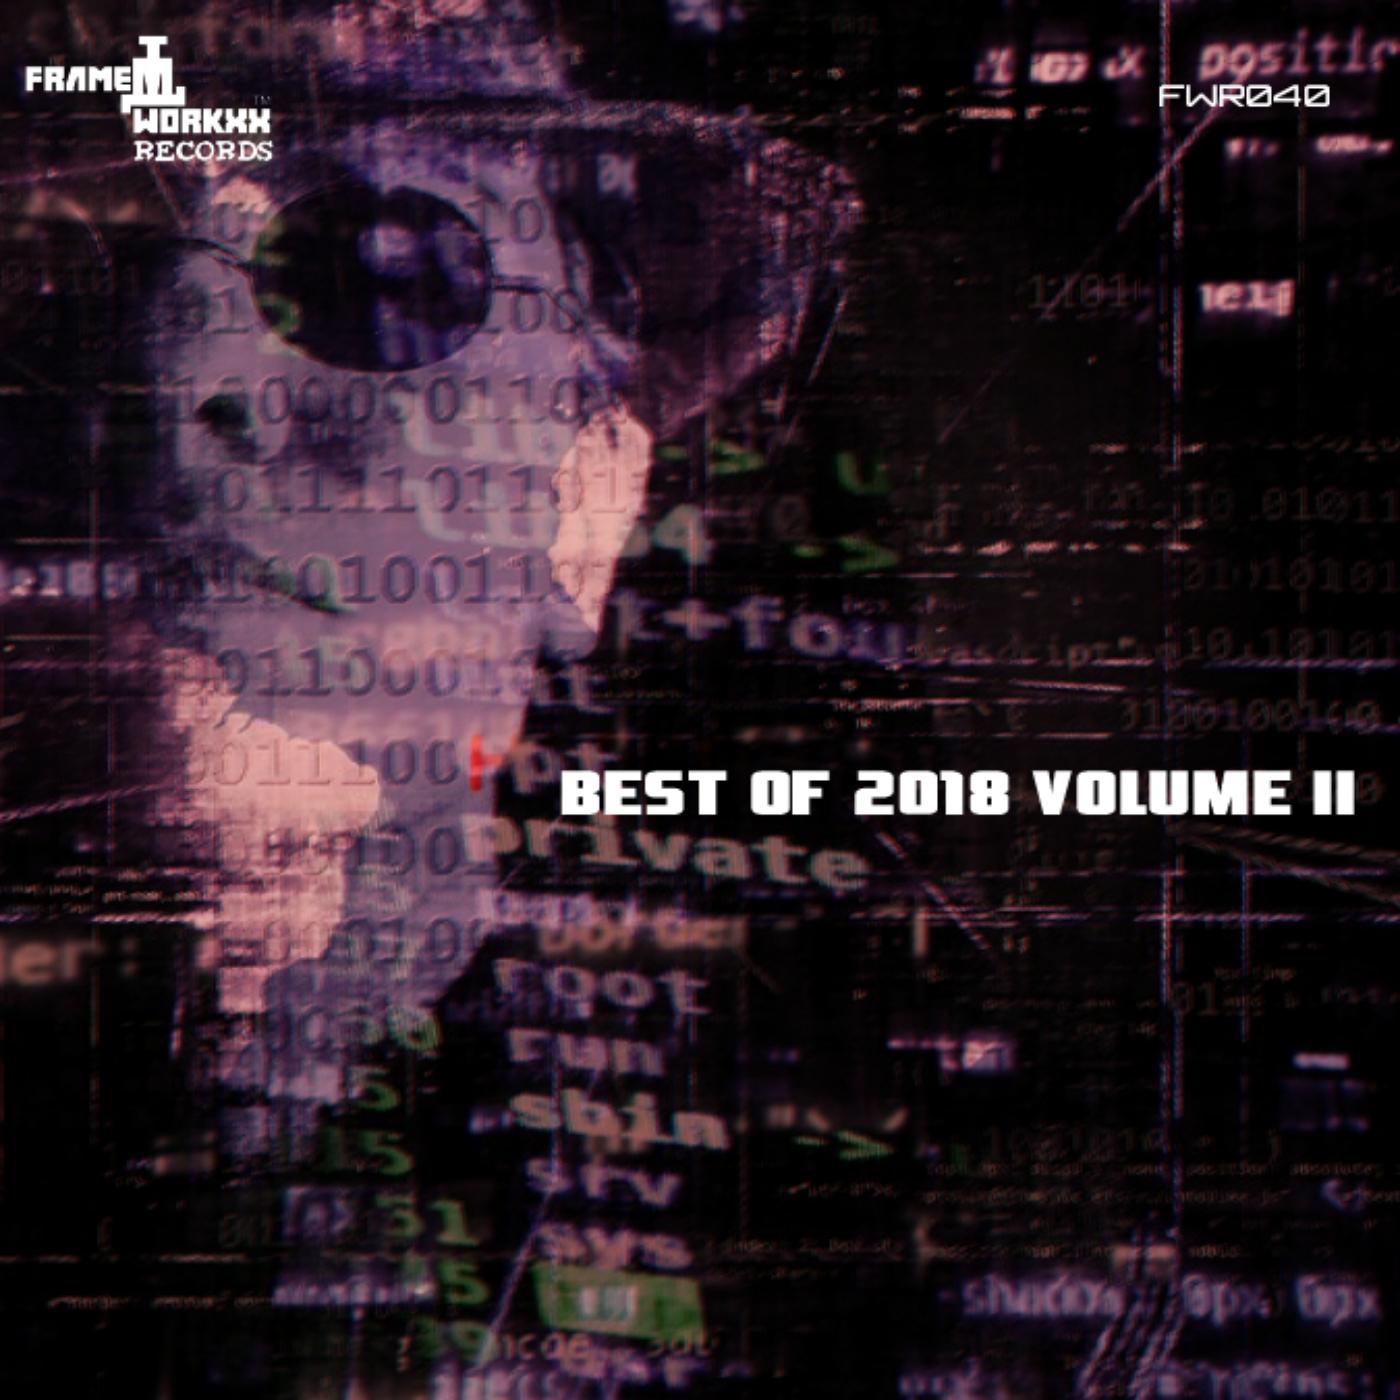 Best Of Frame Workxx Records 2018 Volume II